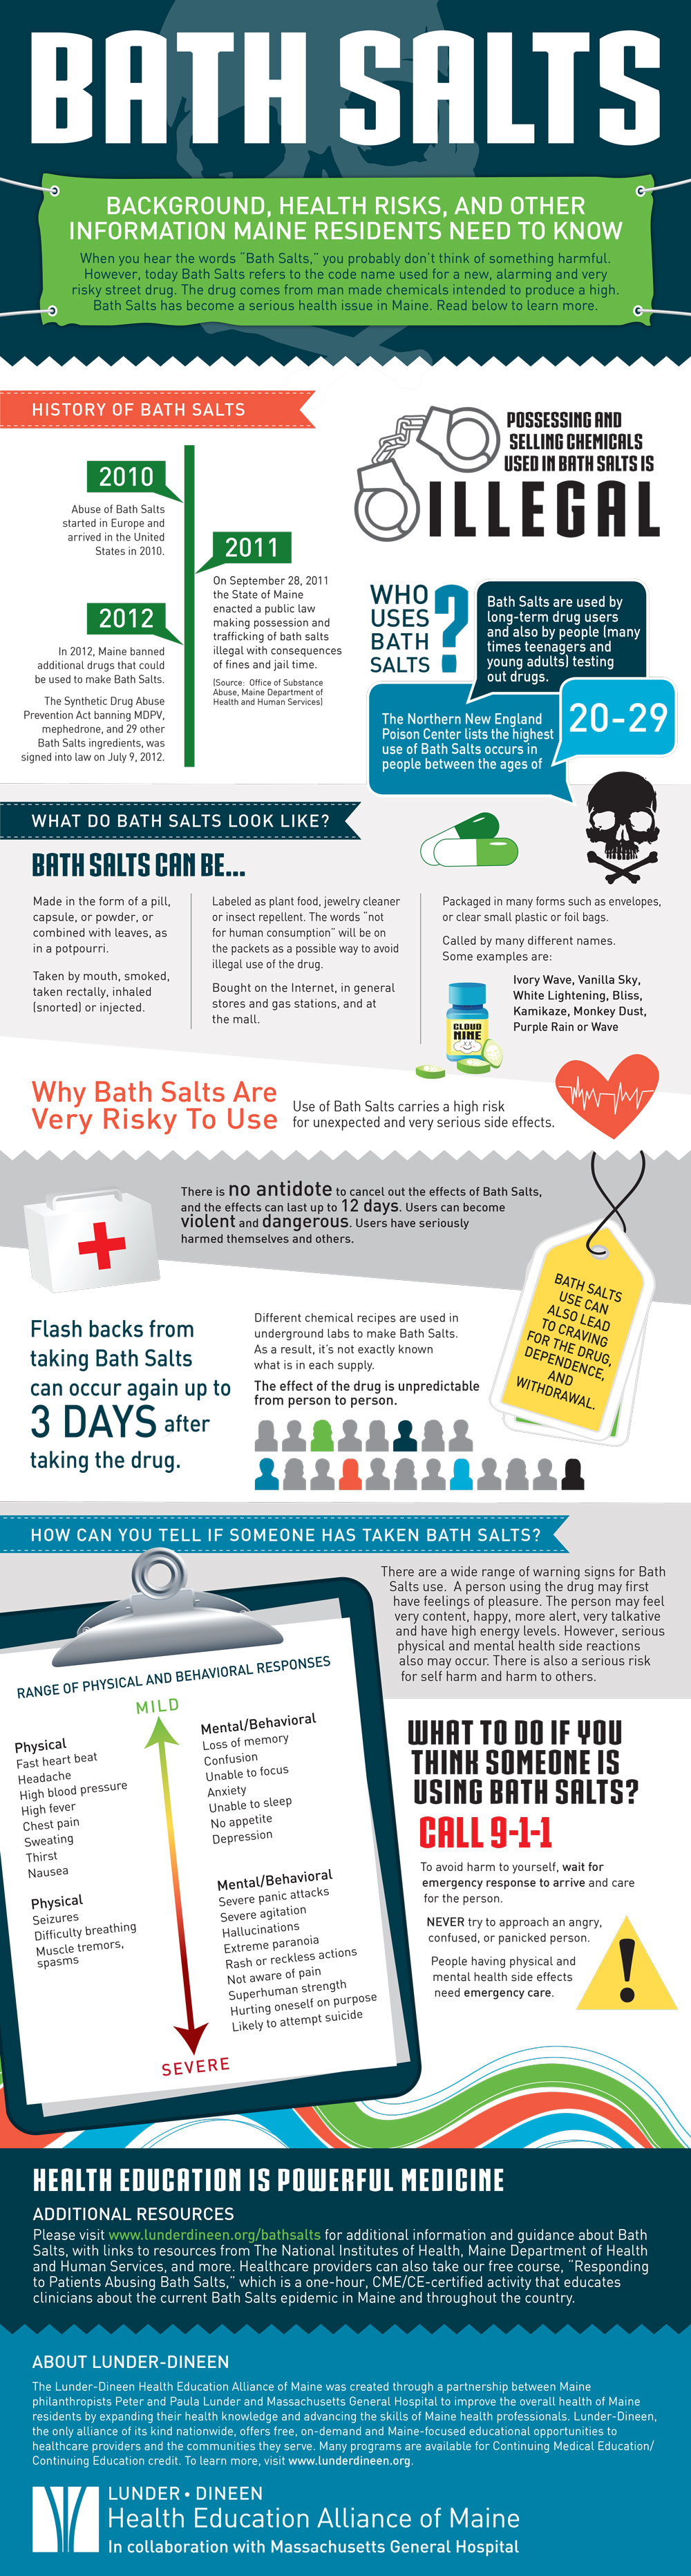 Bath salts infographic